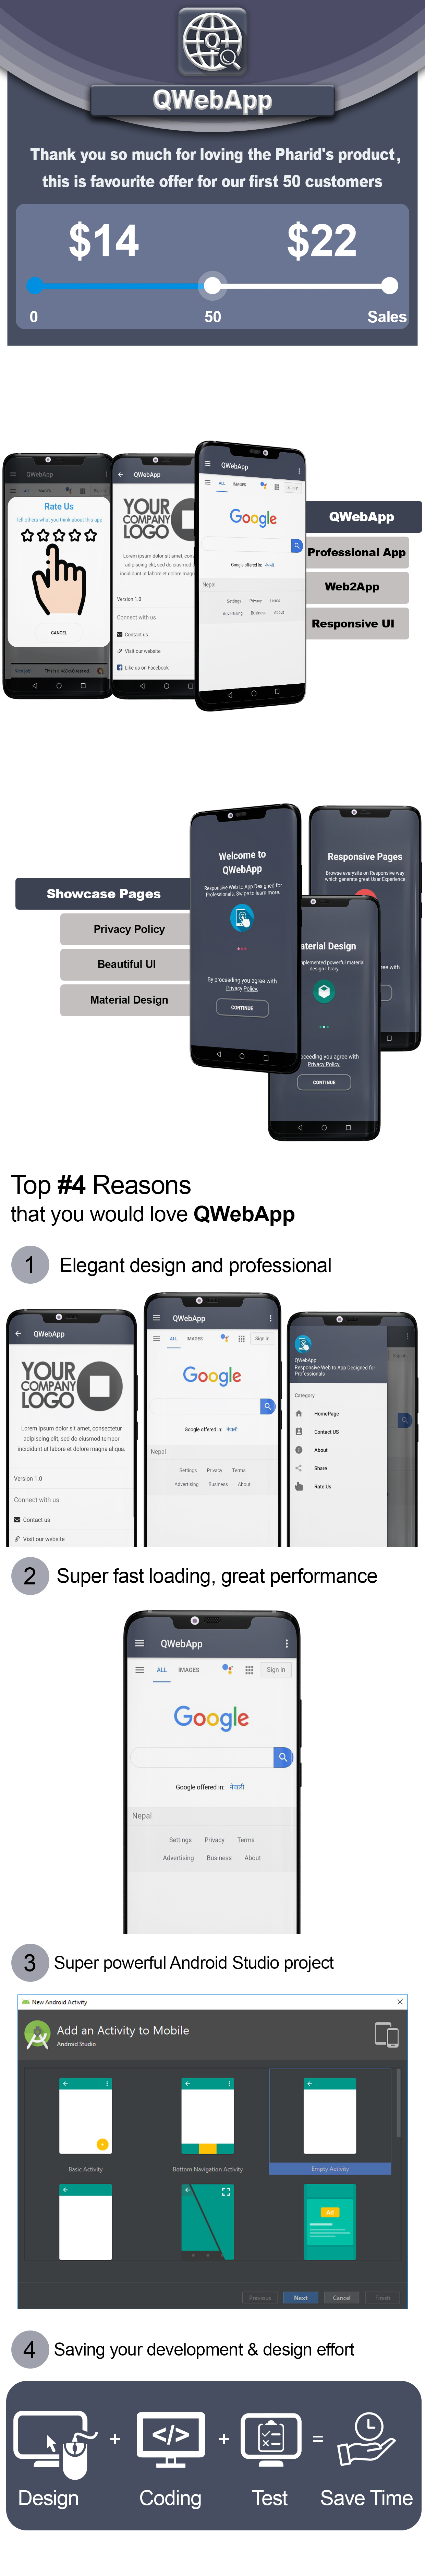 QWeb App - Professional Web2App Template | Material Design, OneSignal, Admob Ads - 3